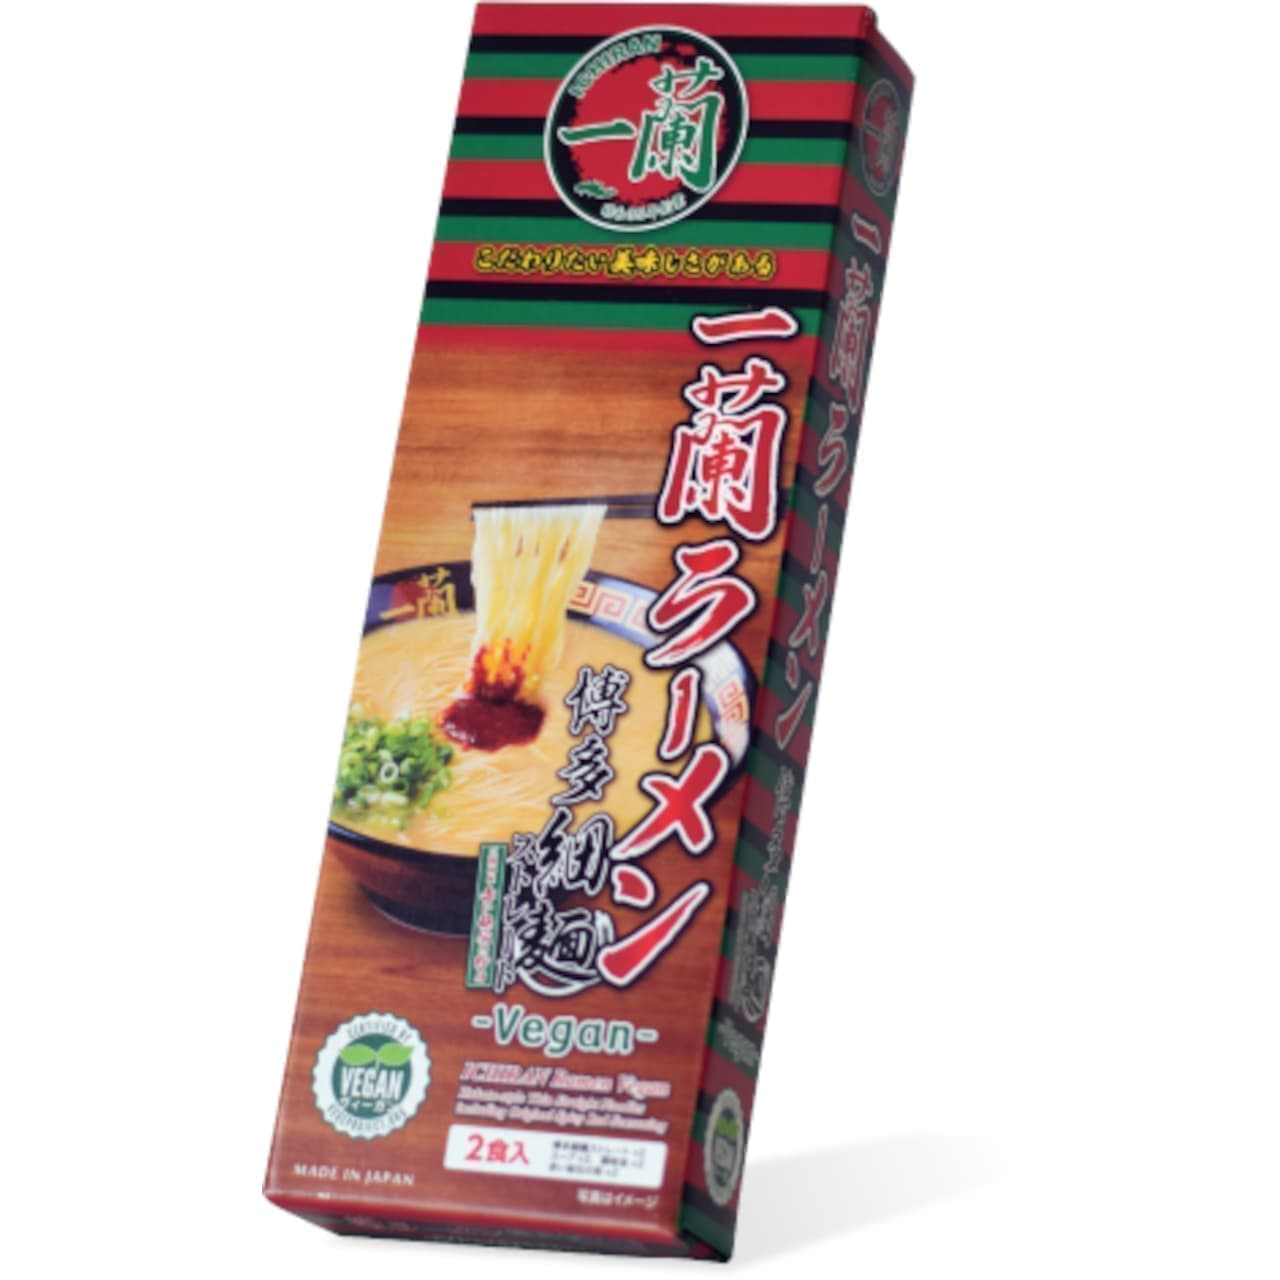 Ichiran "Ichiran Ramen Hakata thin noodles straight, Ichiran special, with red secret powder Vegan".